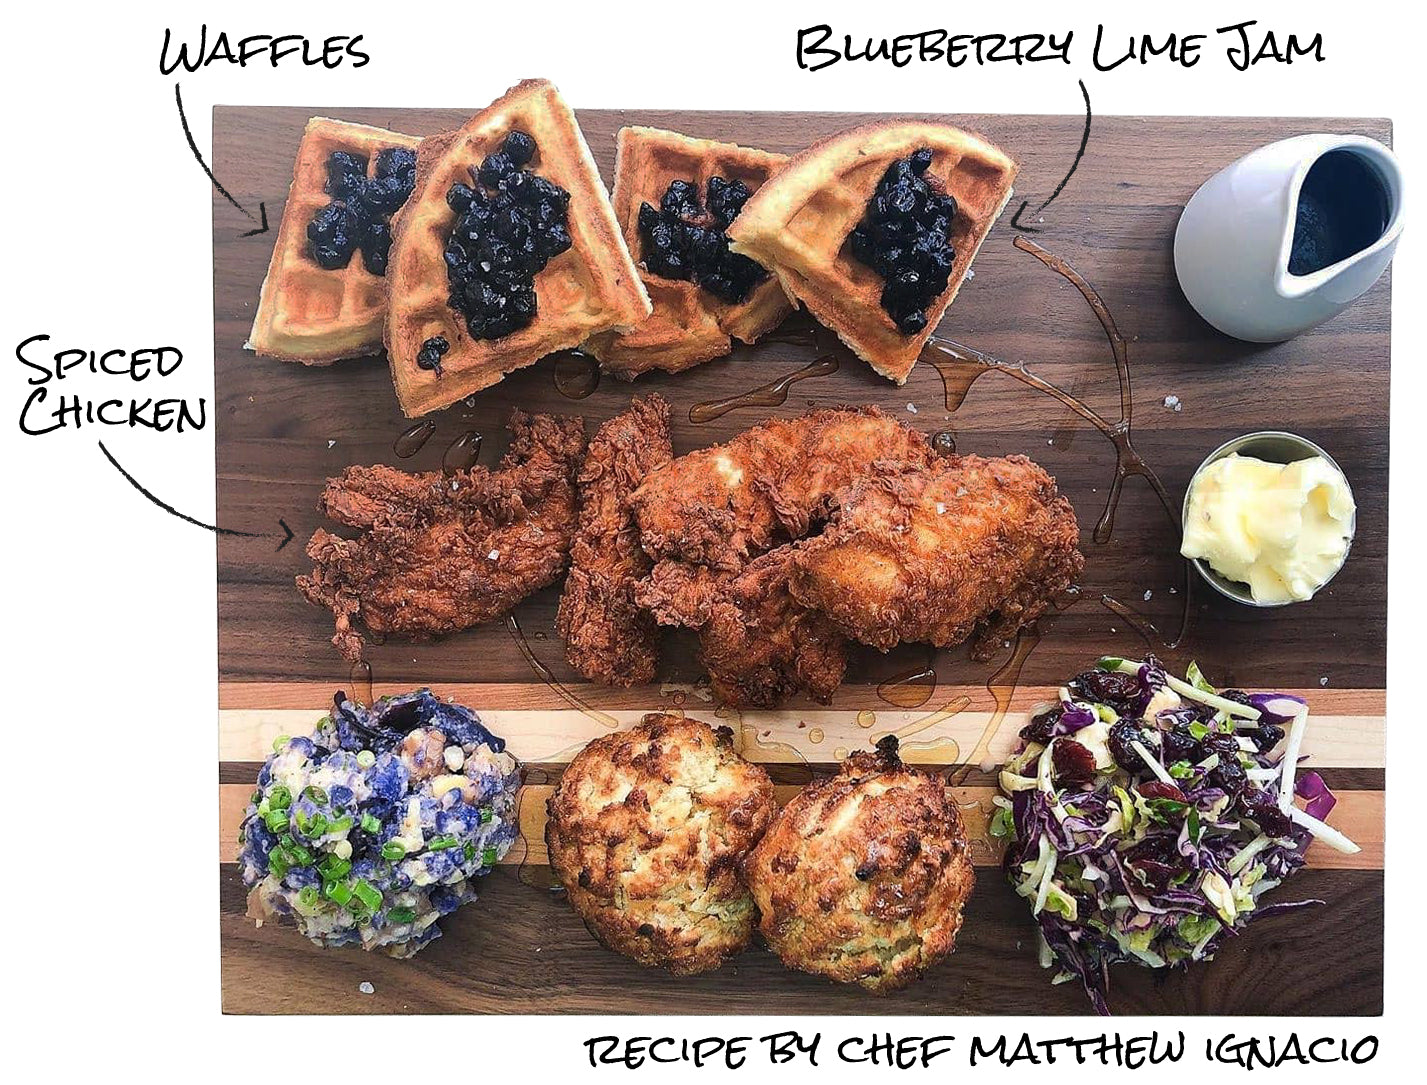 Chicken and waffles on sonder la motley cutting board